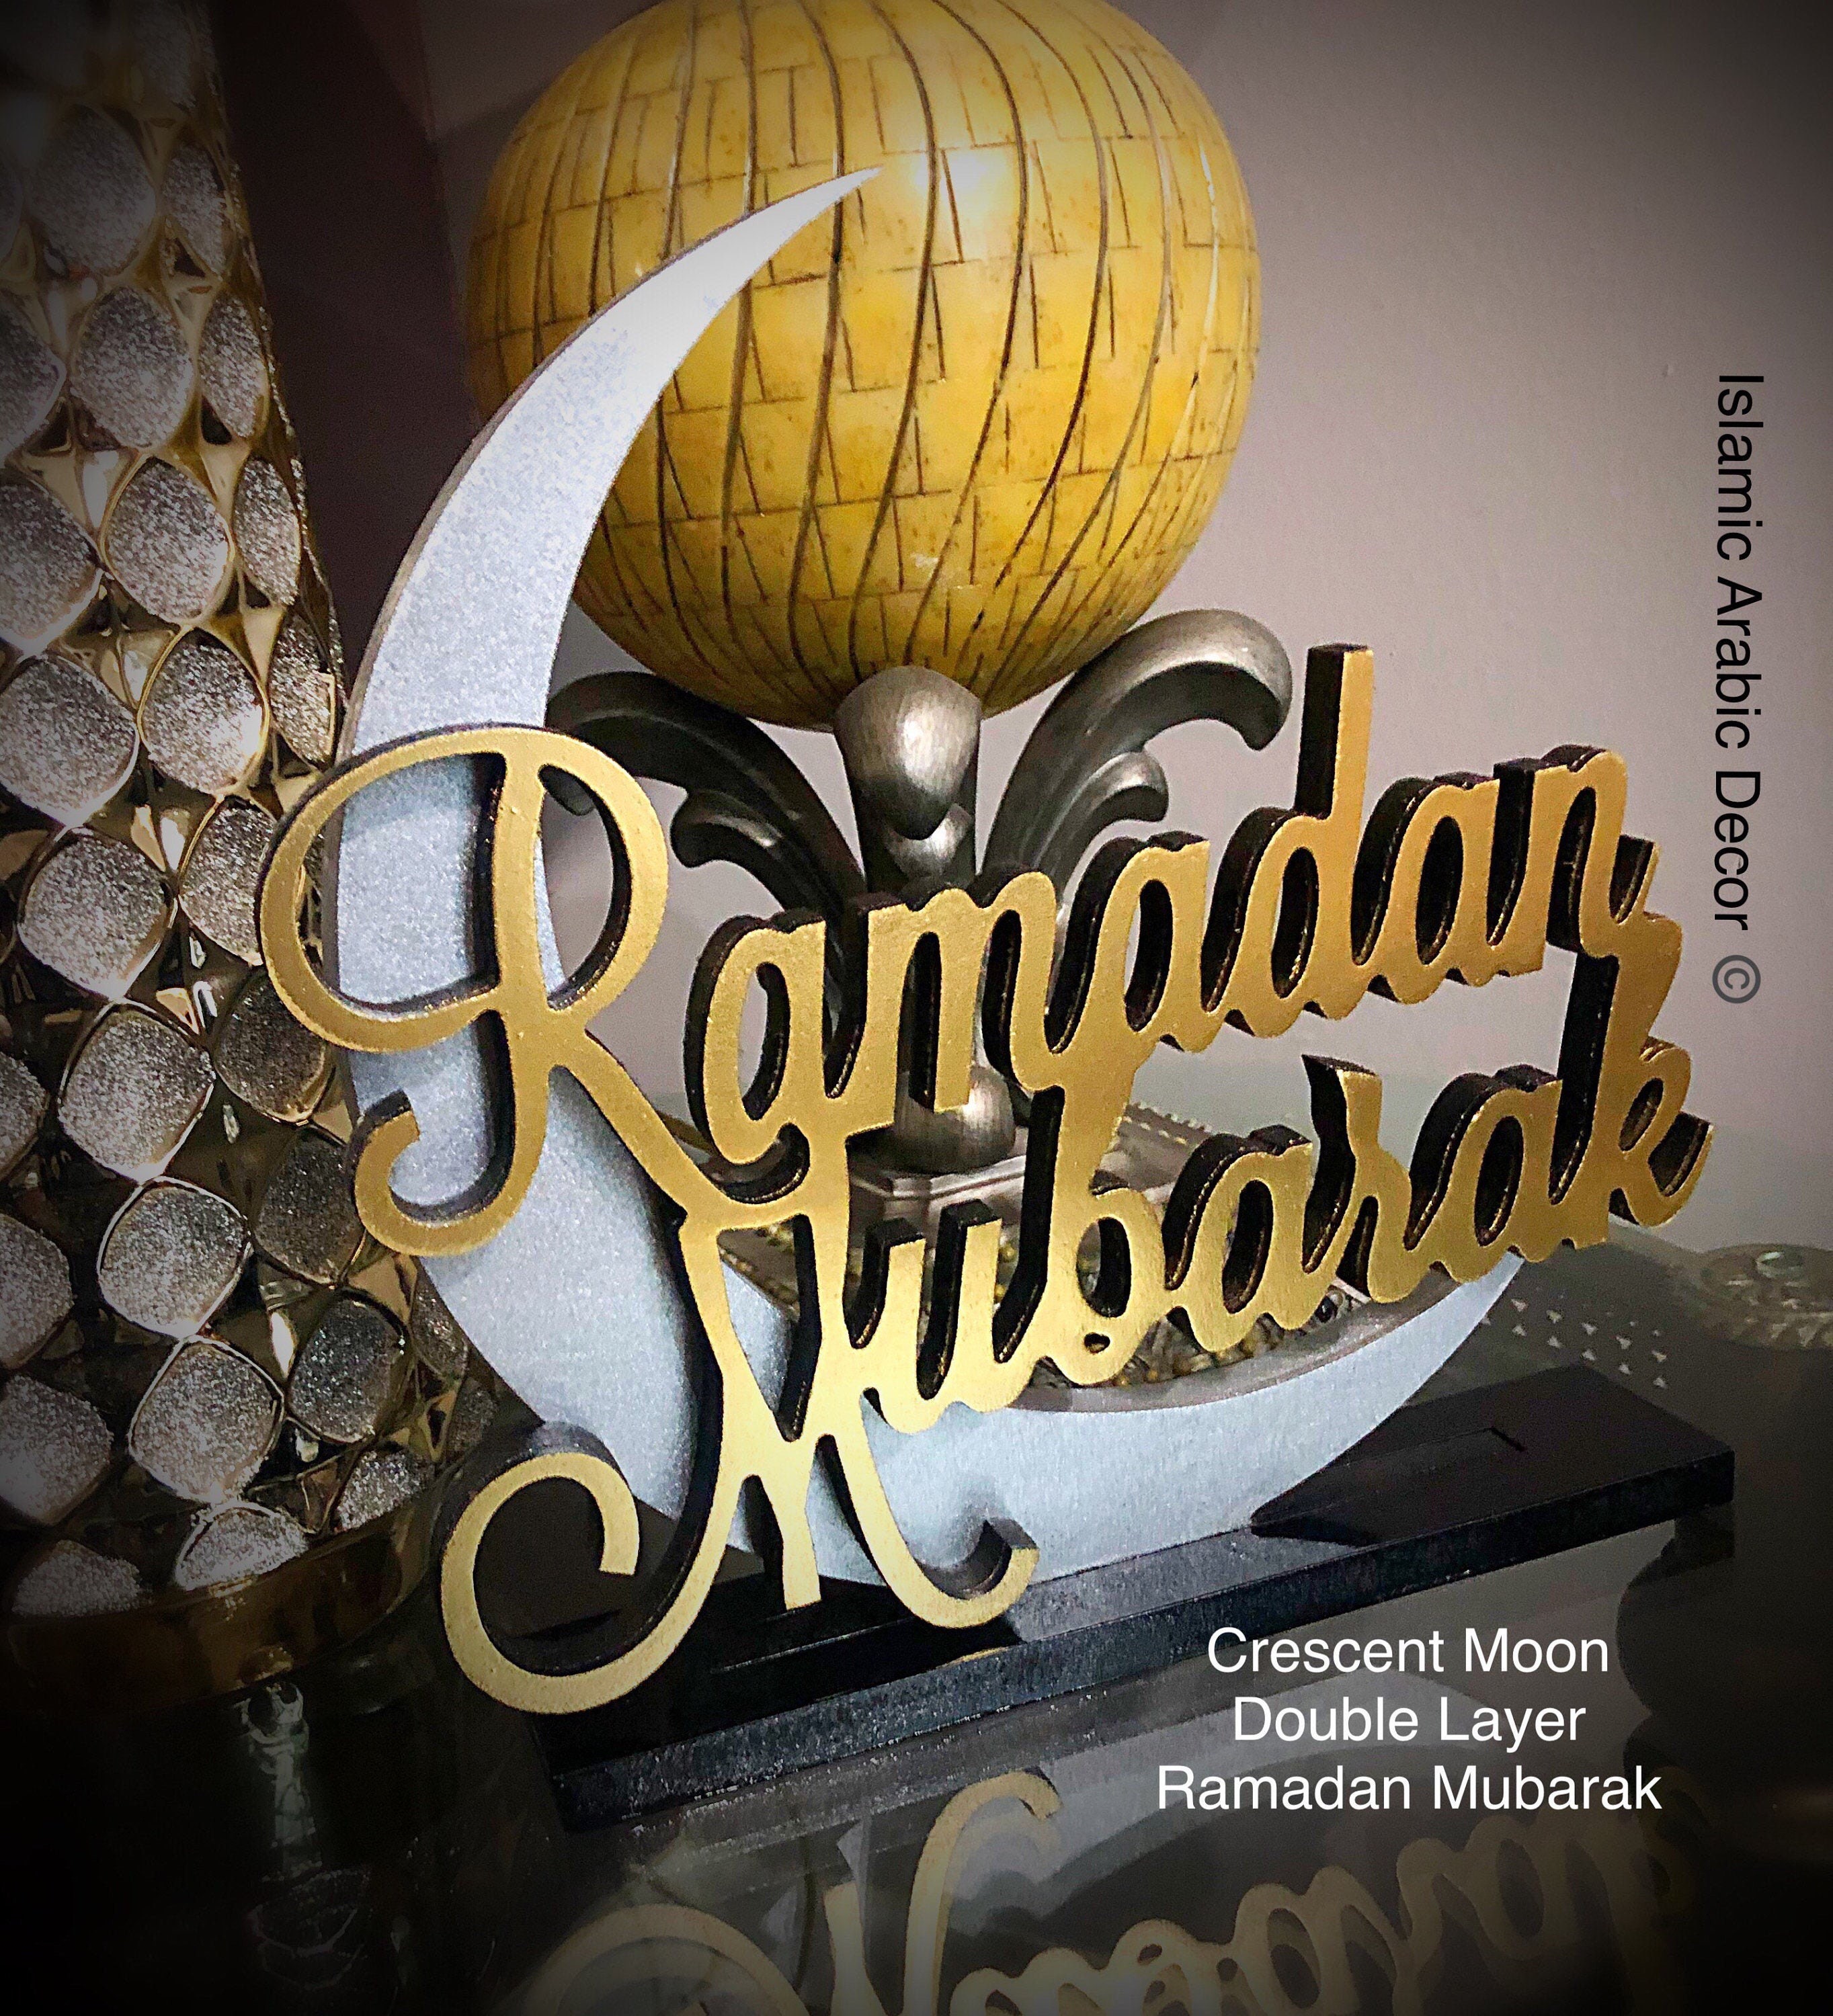 Ramadan Mubarak With Crescent Moon Double Layer Wooden Tabletop, Arabic Wall Art, Islamic Home Decor, Gifts, Eid